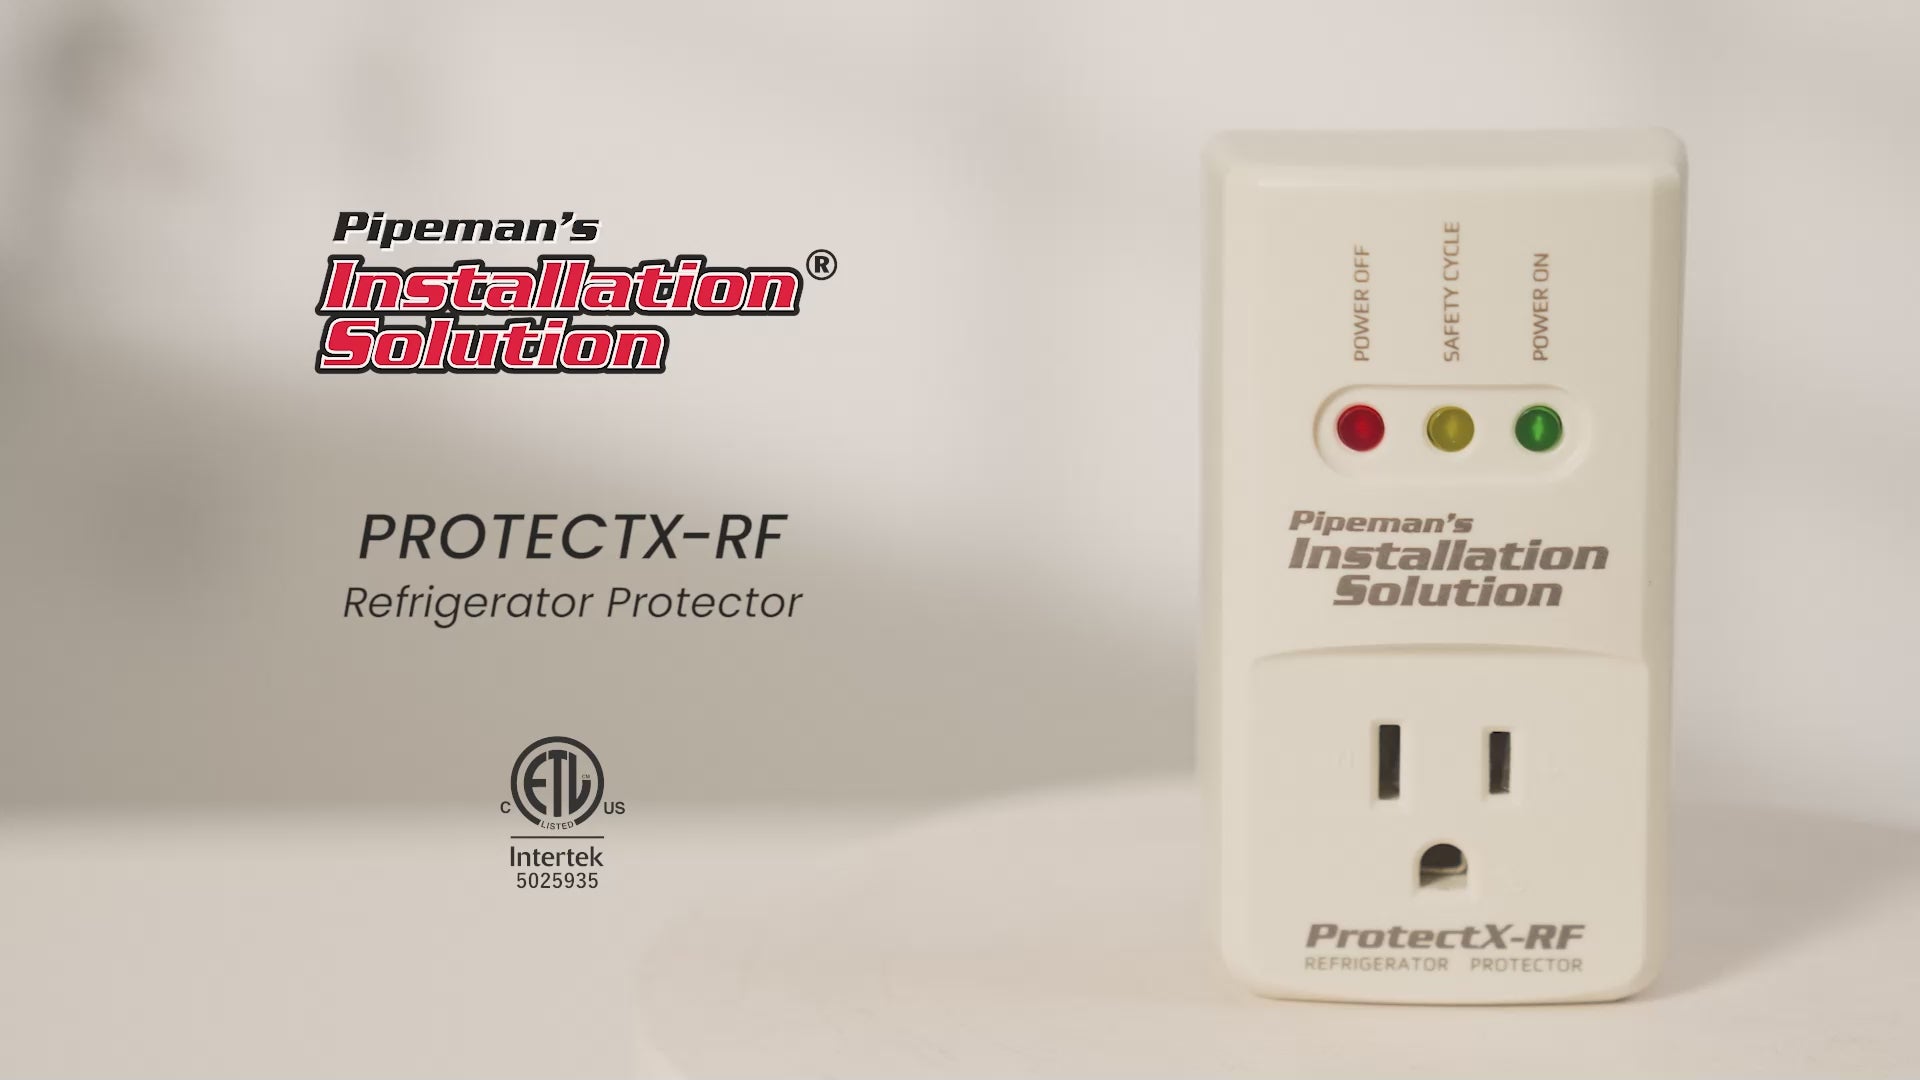 PROTECTX-RF Voltage Surge Protector – Installation Solution